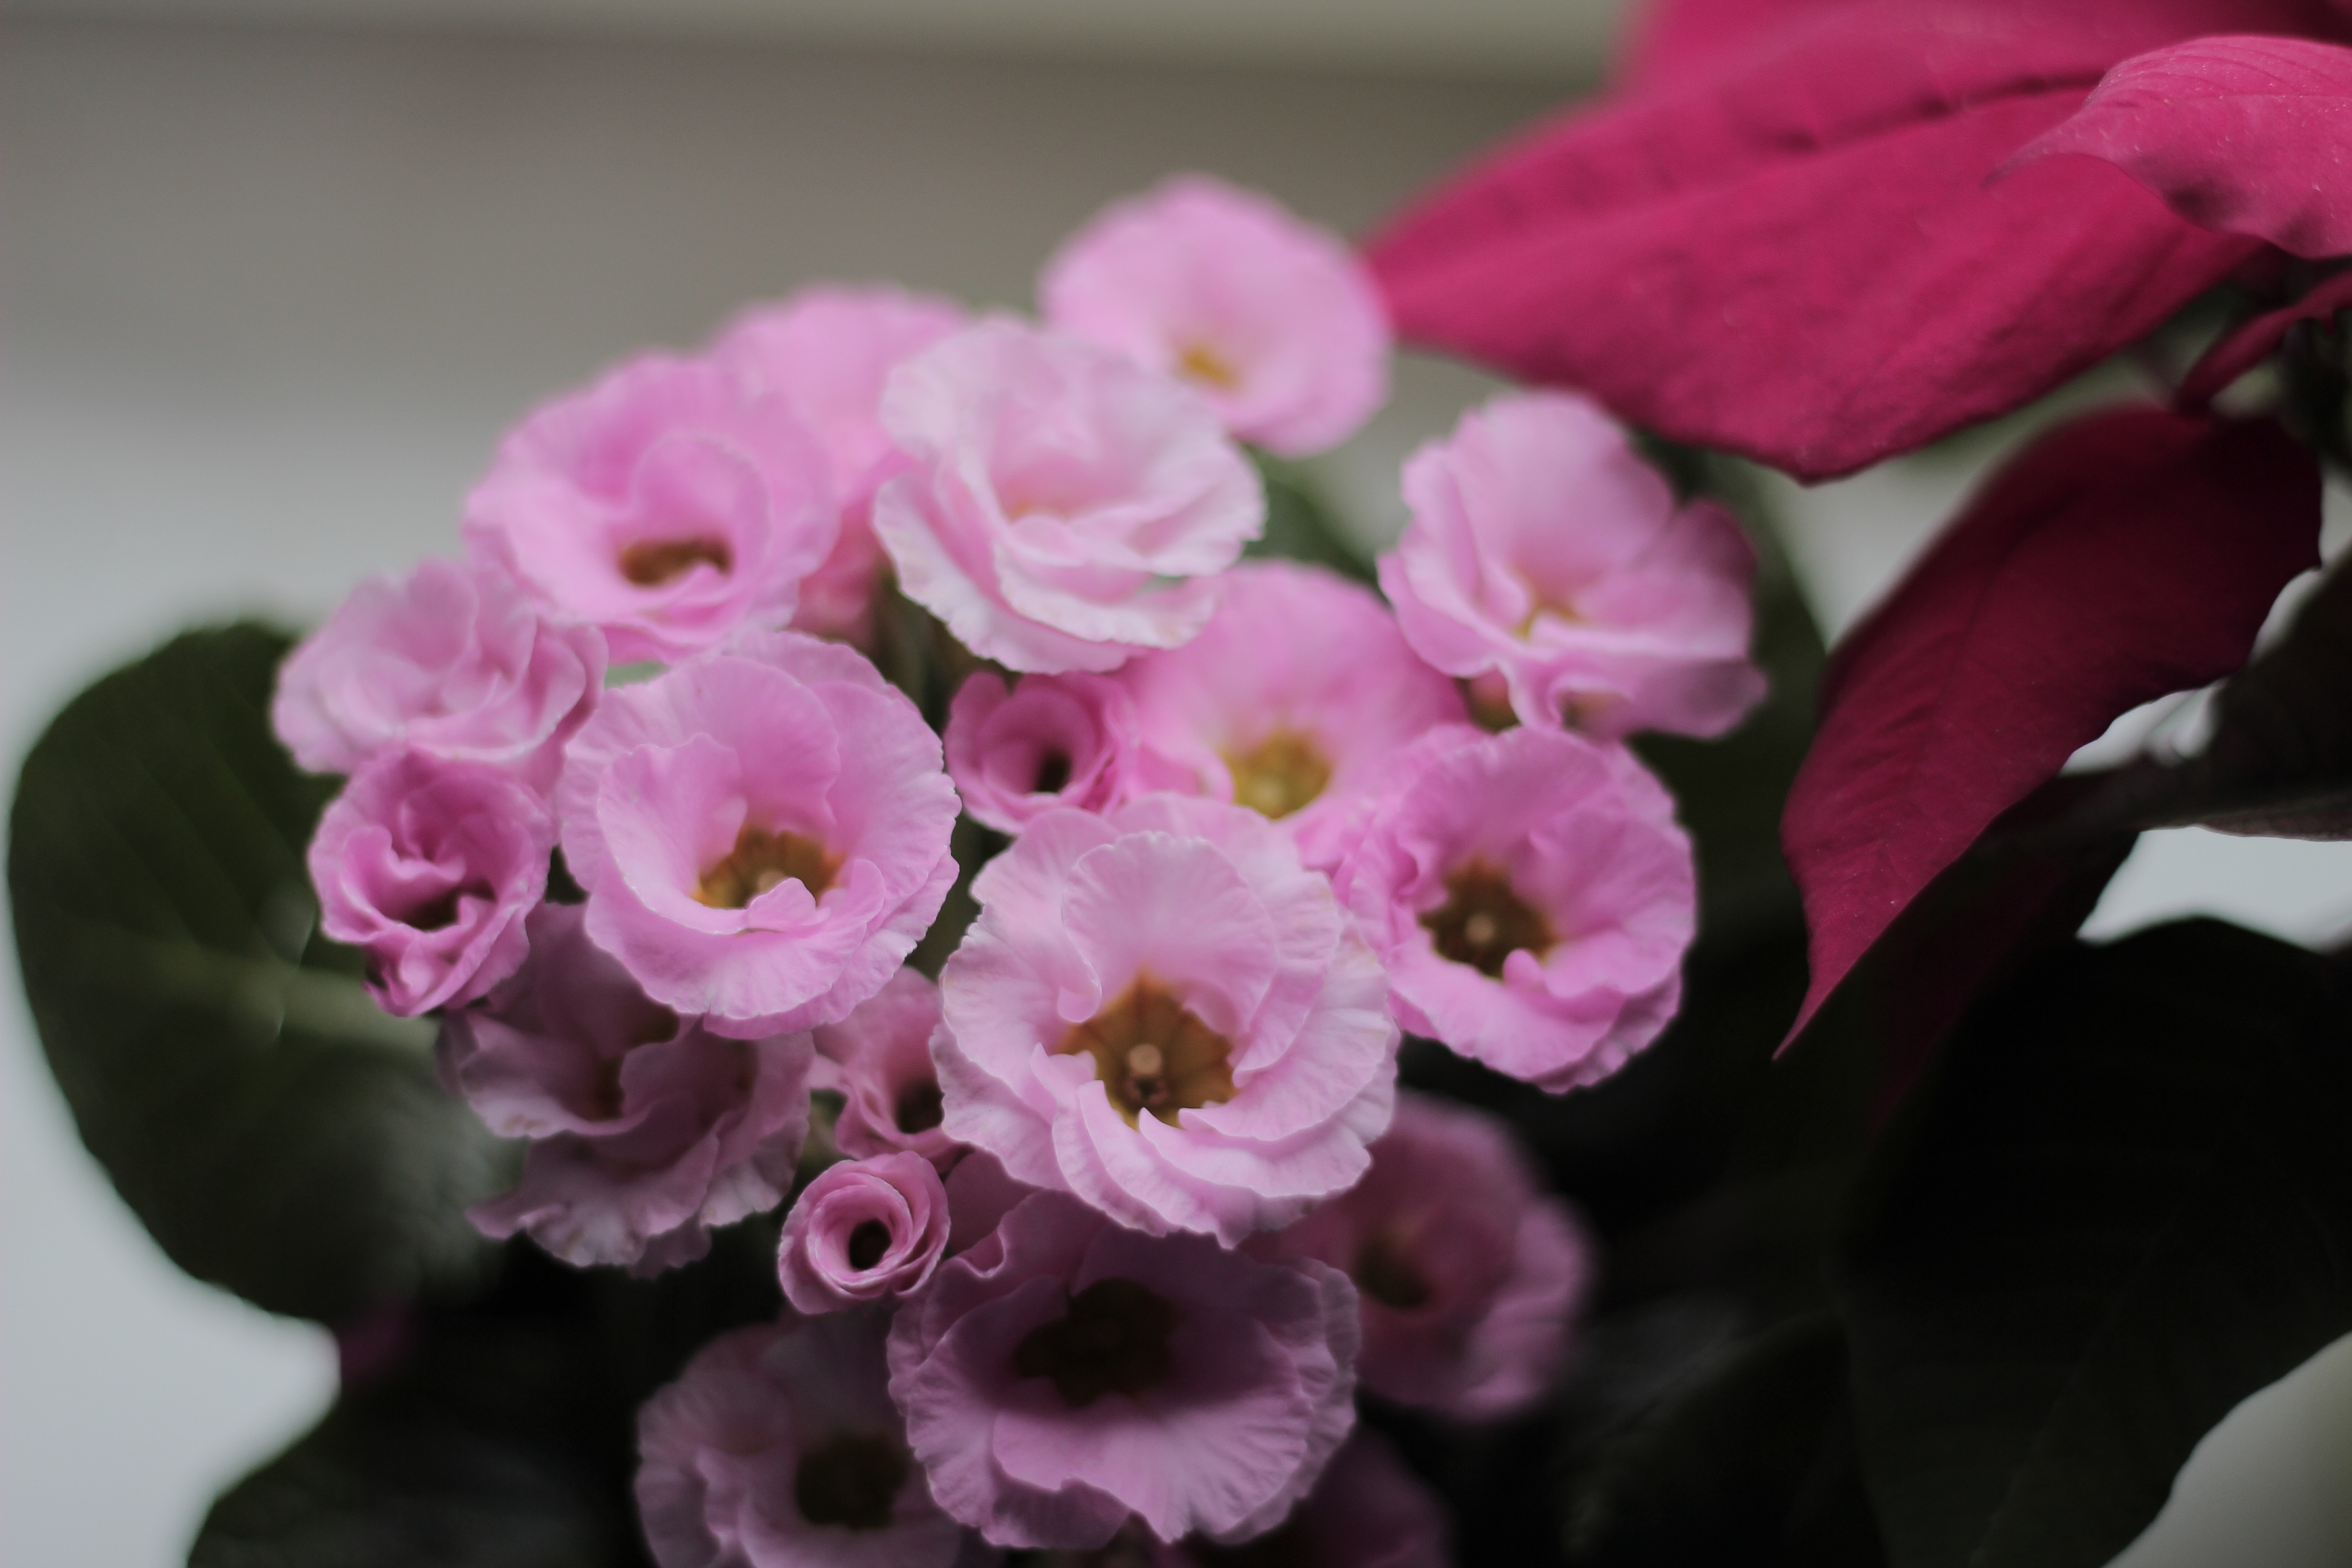 pink petaled flower bouquet